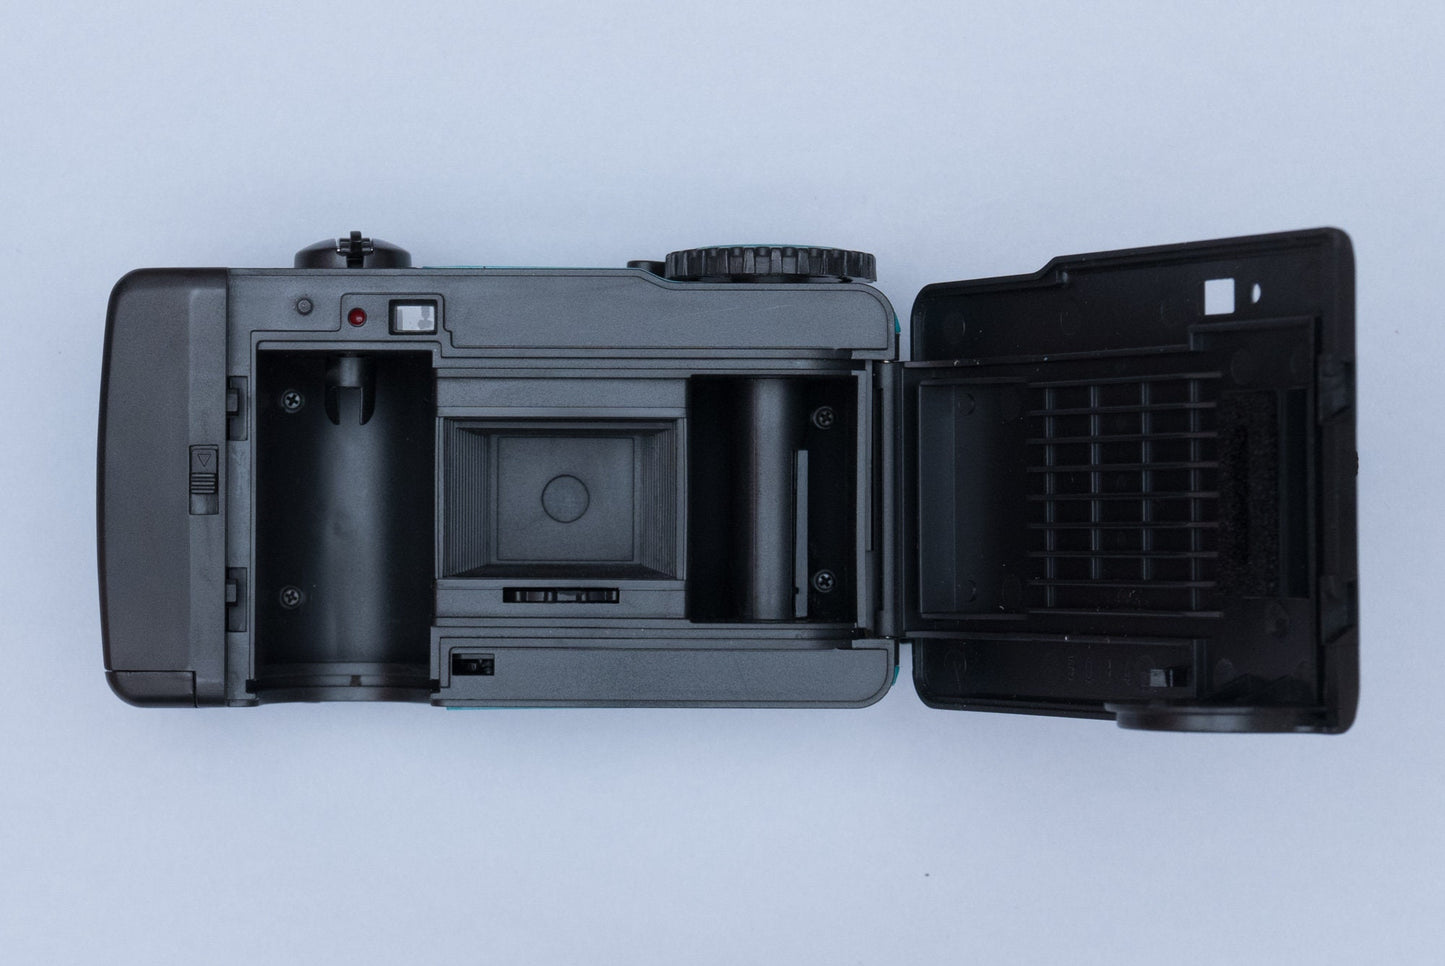 Vivitar L.A. Brites Point and Shoot 35mm Compact Film Camera